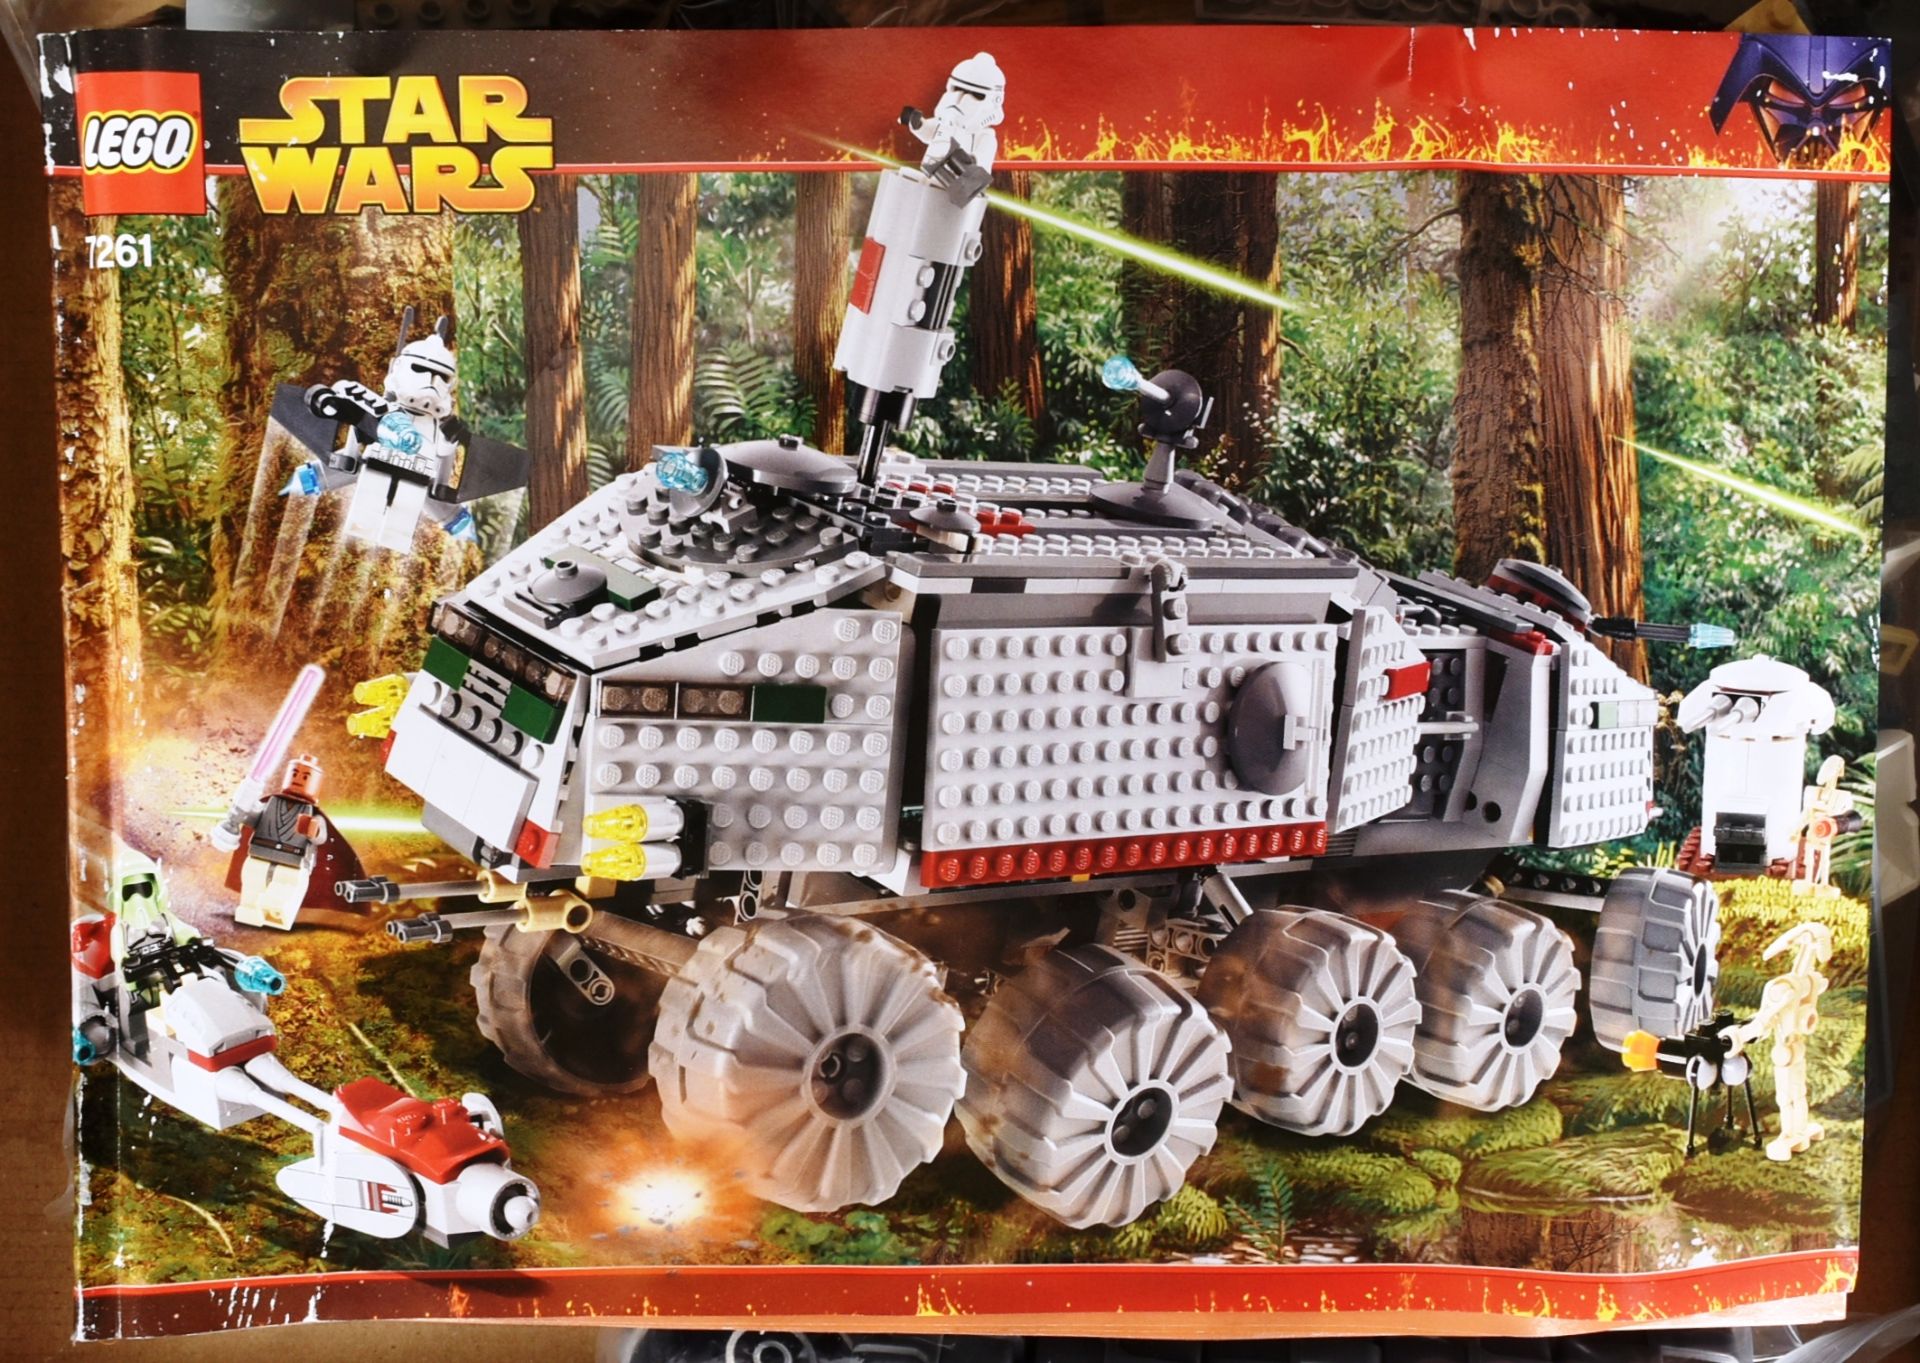 LEGO - STAR WARS - 7261 - CLONE TURBO TANK - Image 5 of 5